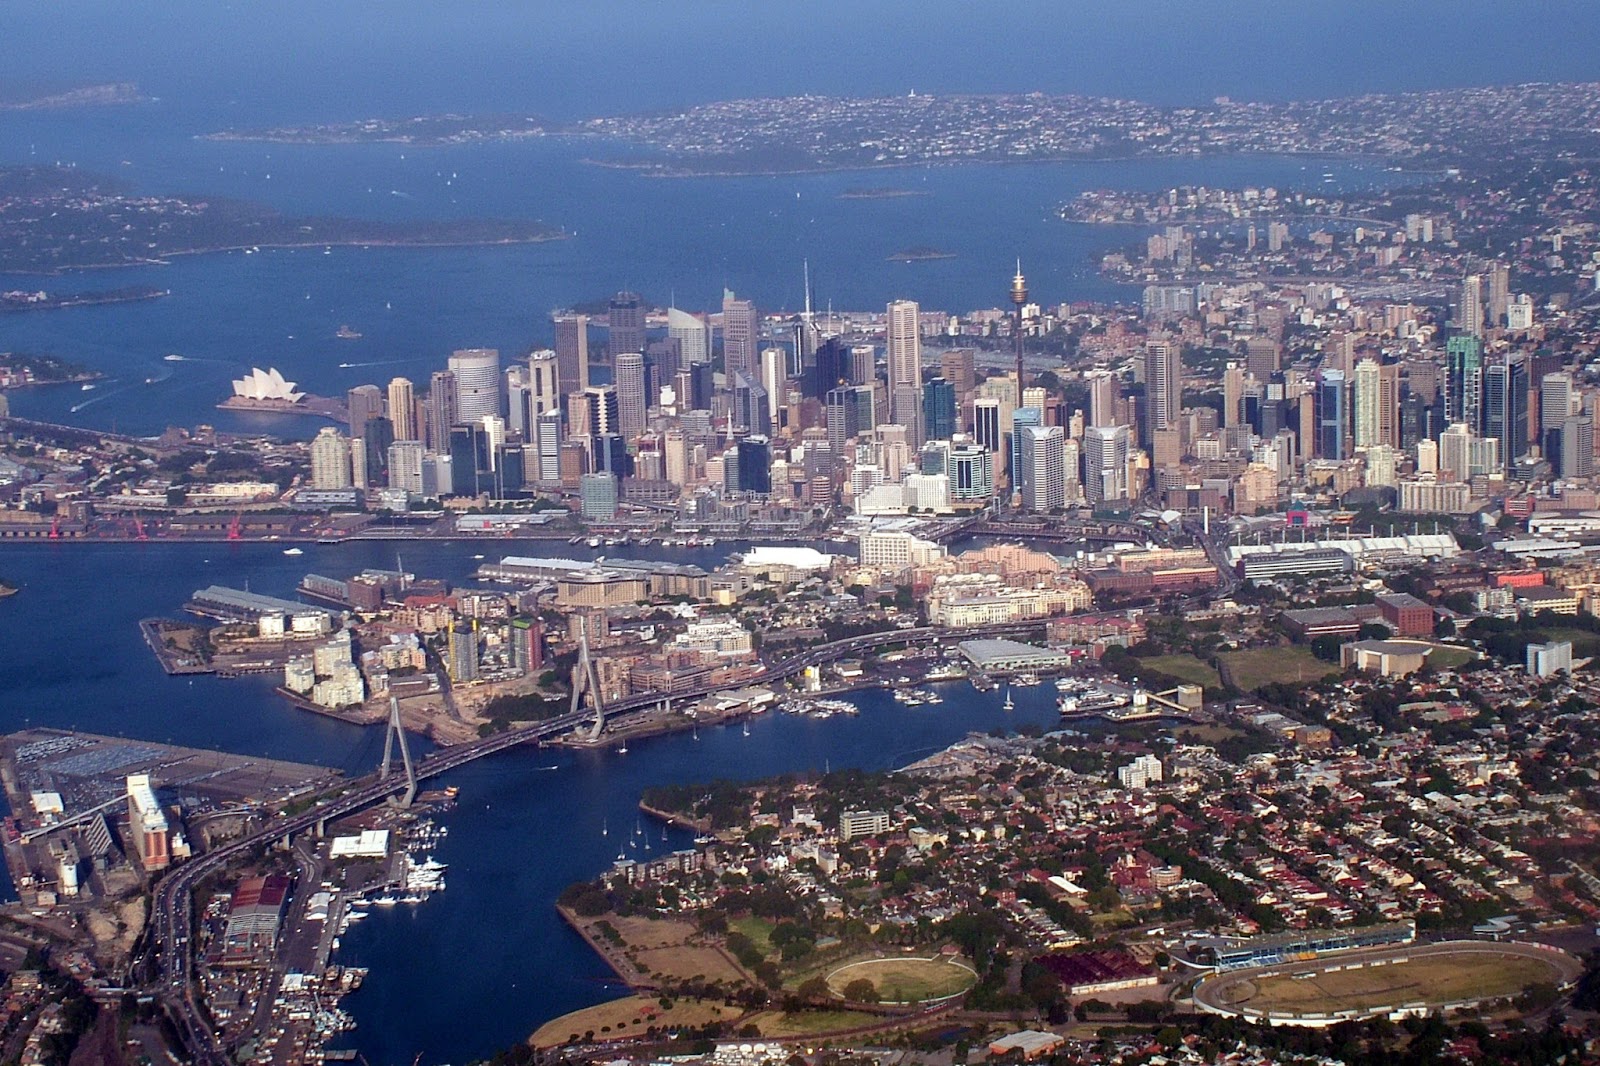 https://blogger.googleusercontent.com/img/b/R29vZ2xl/AVvXsEi50HGTRog7Wem1wzcYkhSzFwNlmplplUH4VWMOo37ZCTl3M0d6F5GeEyyKvG0FlC2cJbjWxMyvAHcf18iSSLo6QiluaiYXwV55DZTxynF0b9HixEVLvhPV079fbhvY7-3pF1R2lzu8xMXq/s1600/Sydney+skyline+from+above.jpg